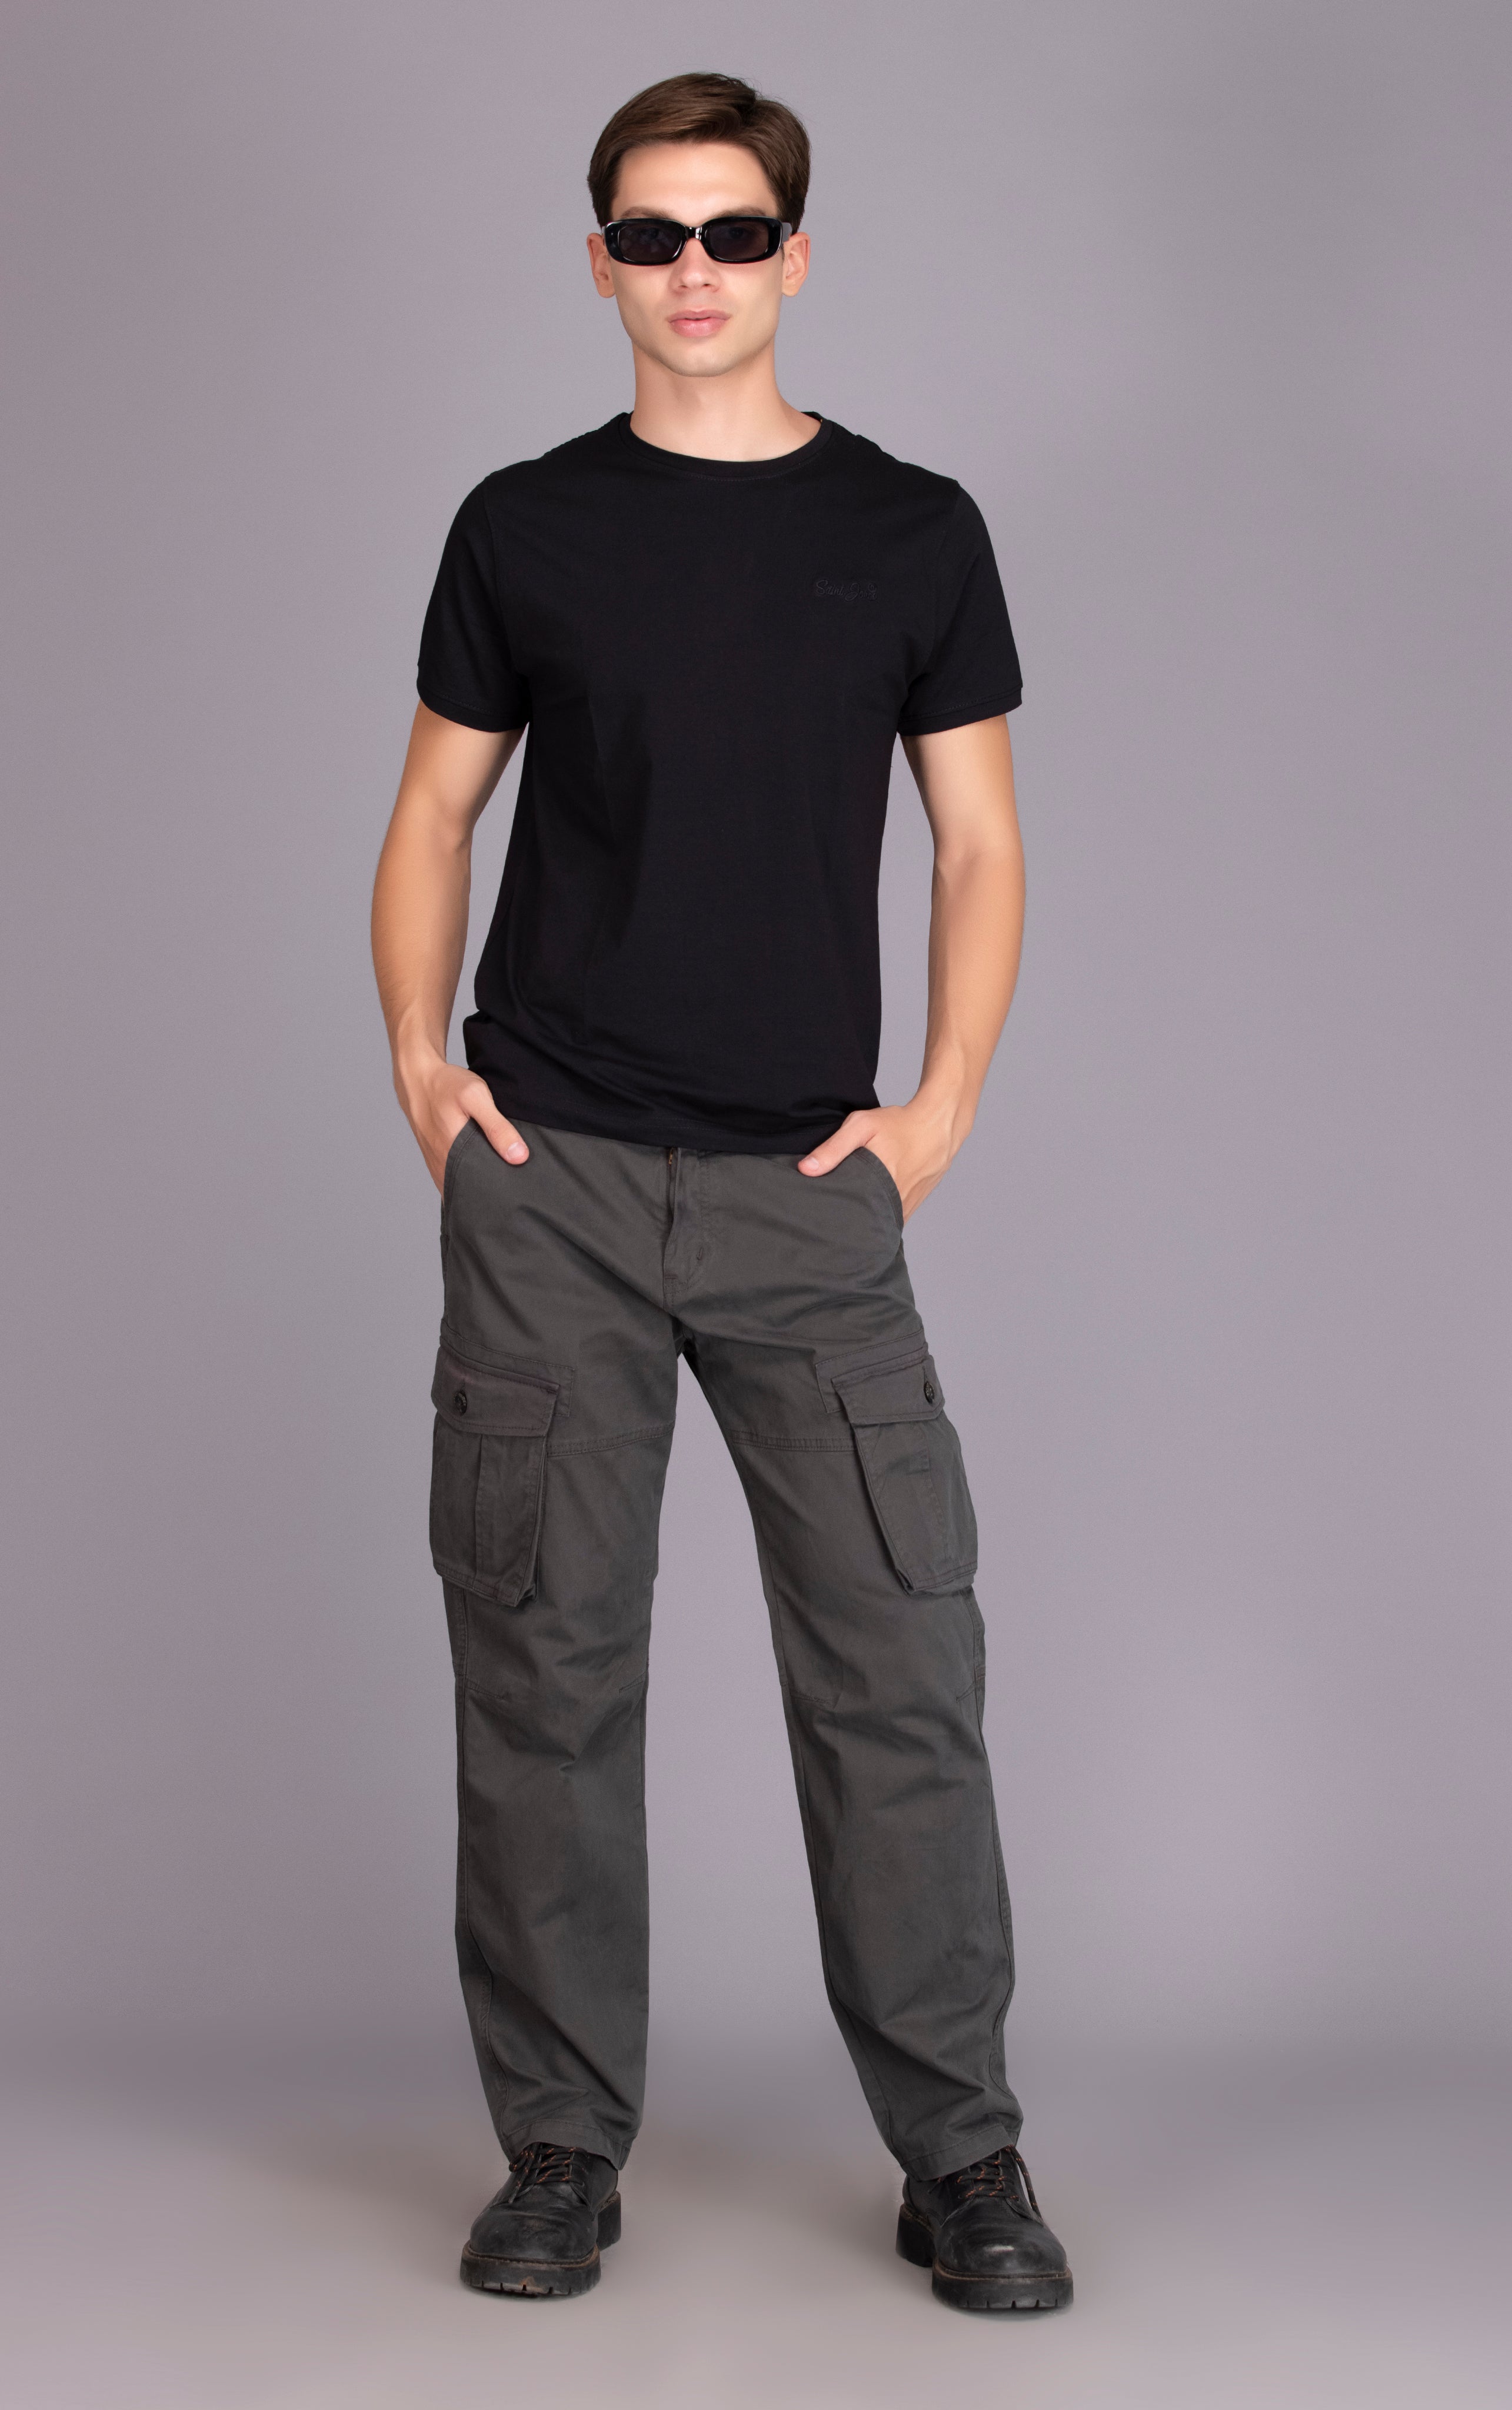 Buy Clothink India-Men's Regular Fit Cargo Pants… (32) Green at Amazon.in